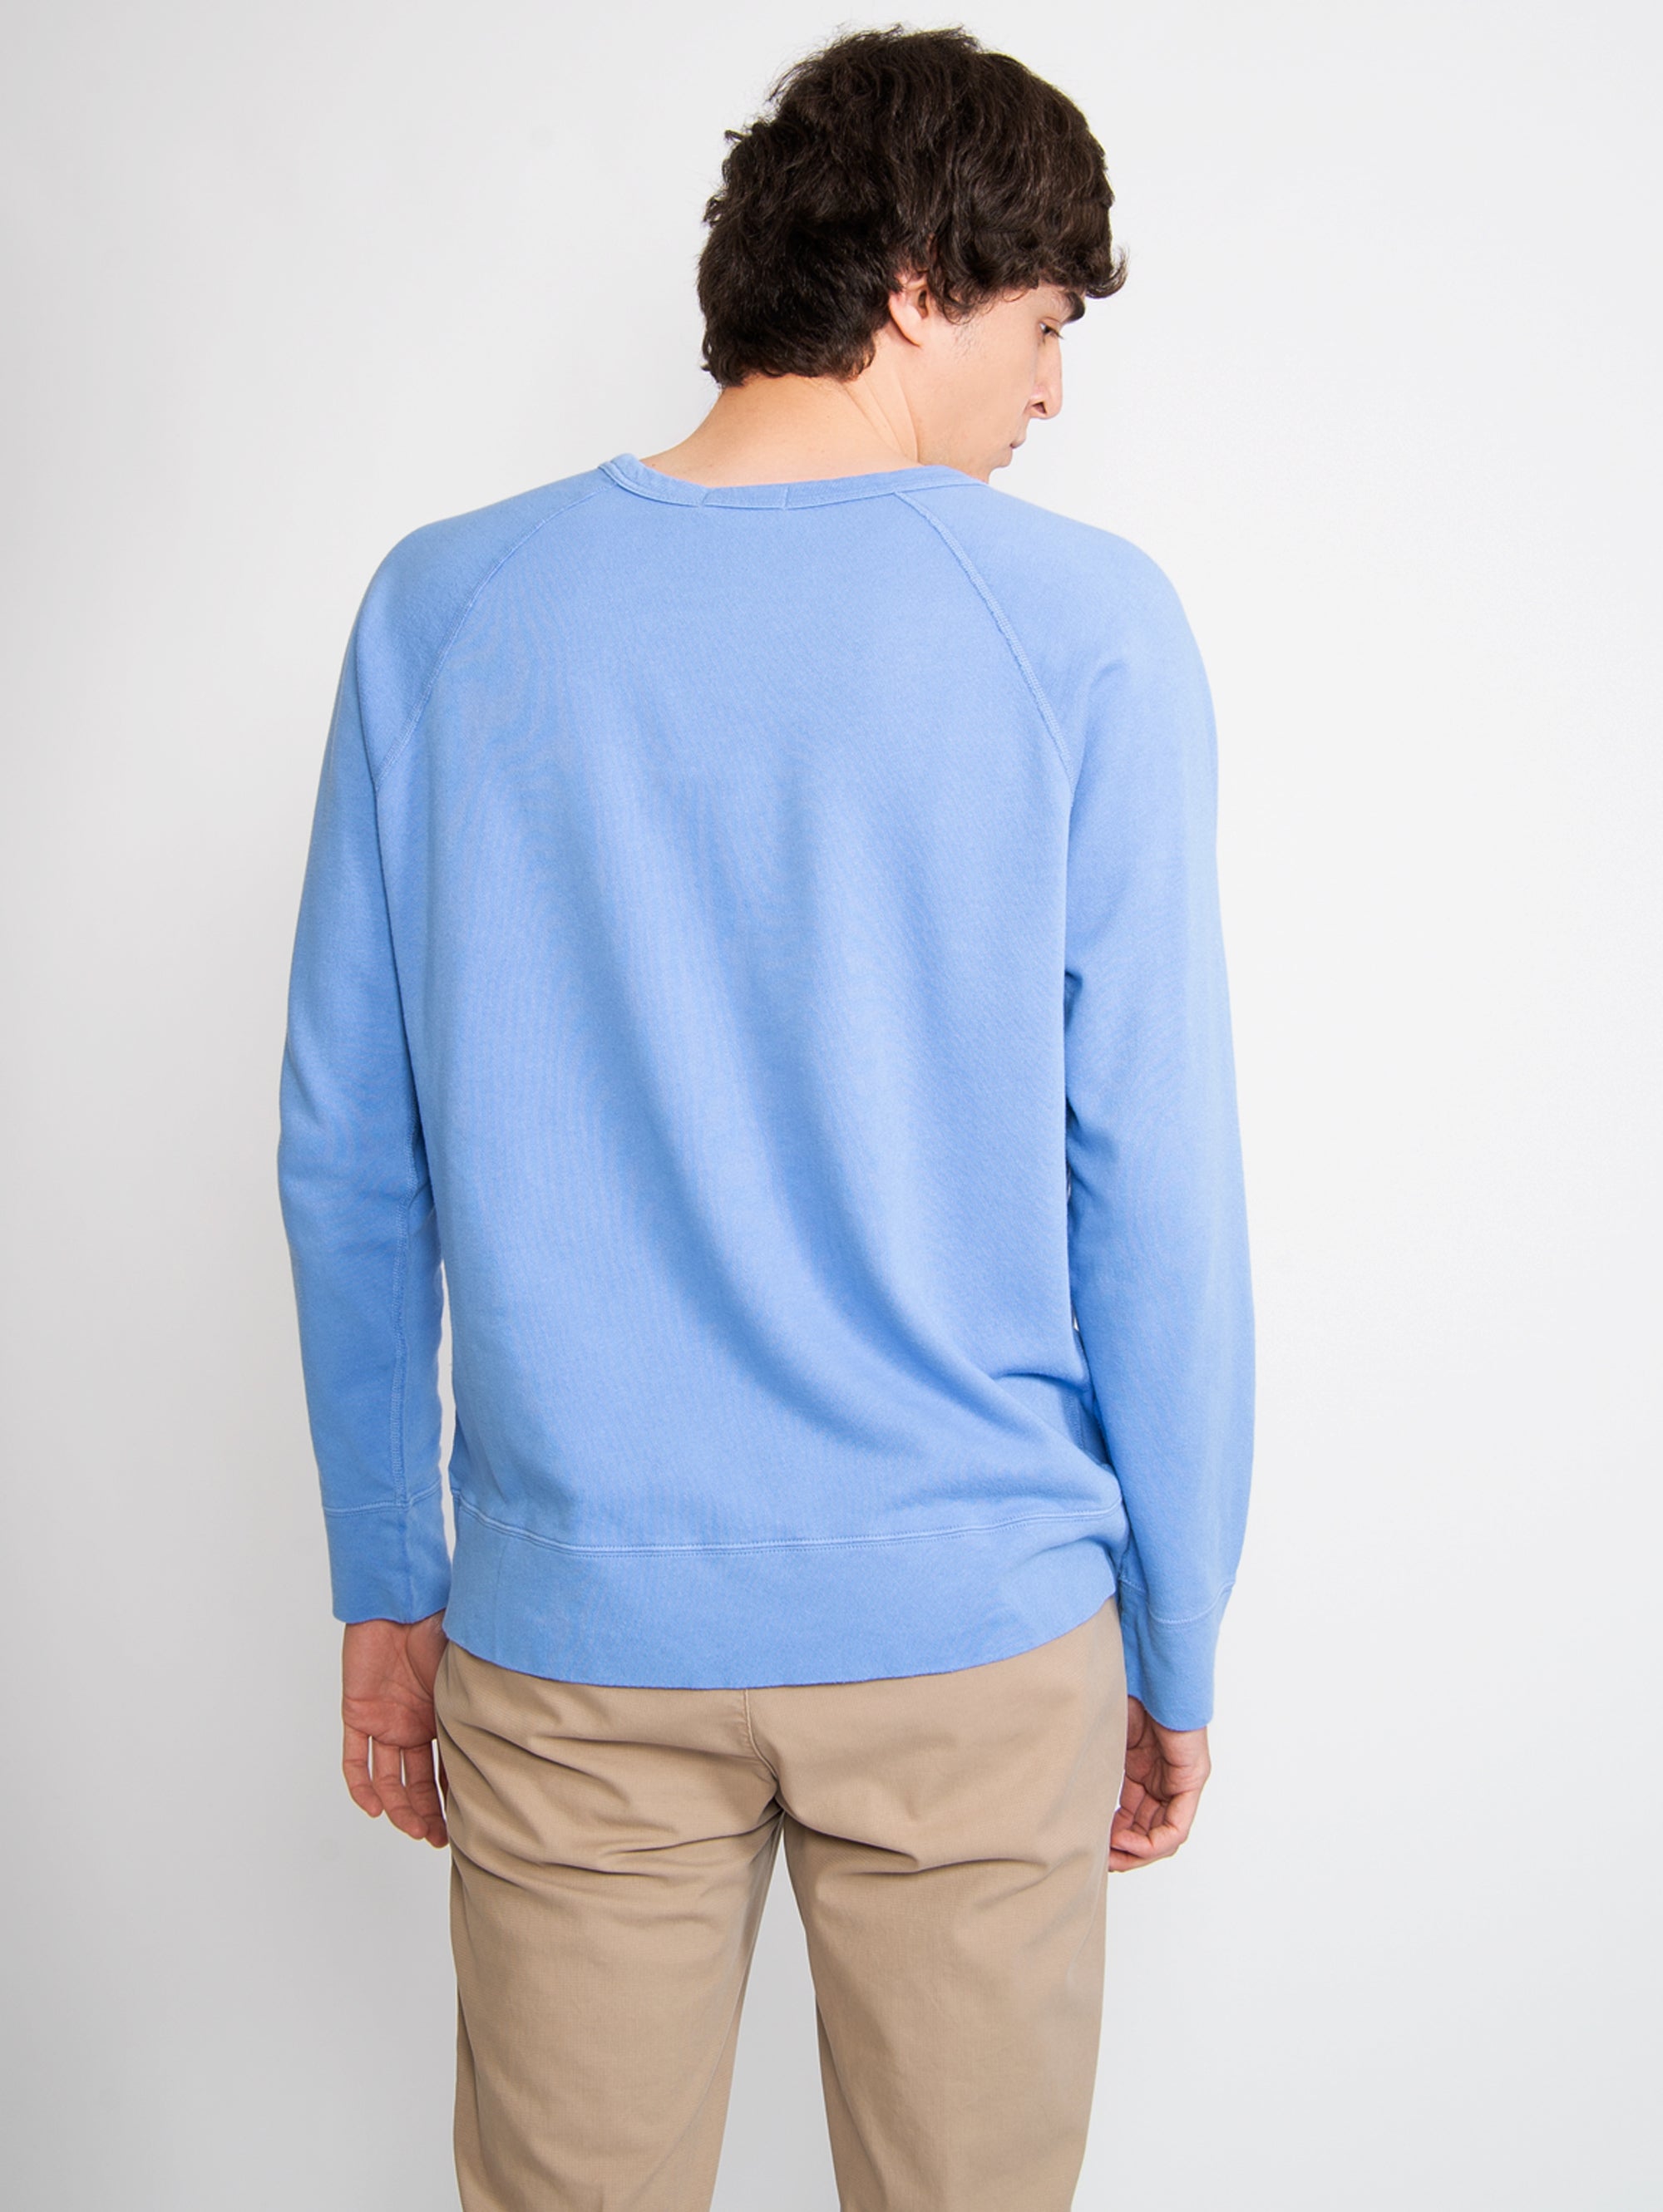 Crewneck Sweatshirt with Blue Raglan Sleeves